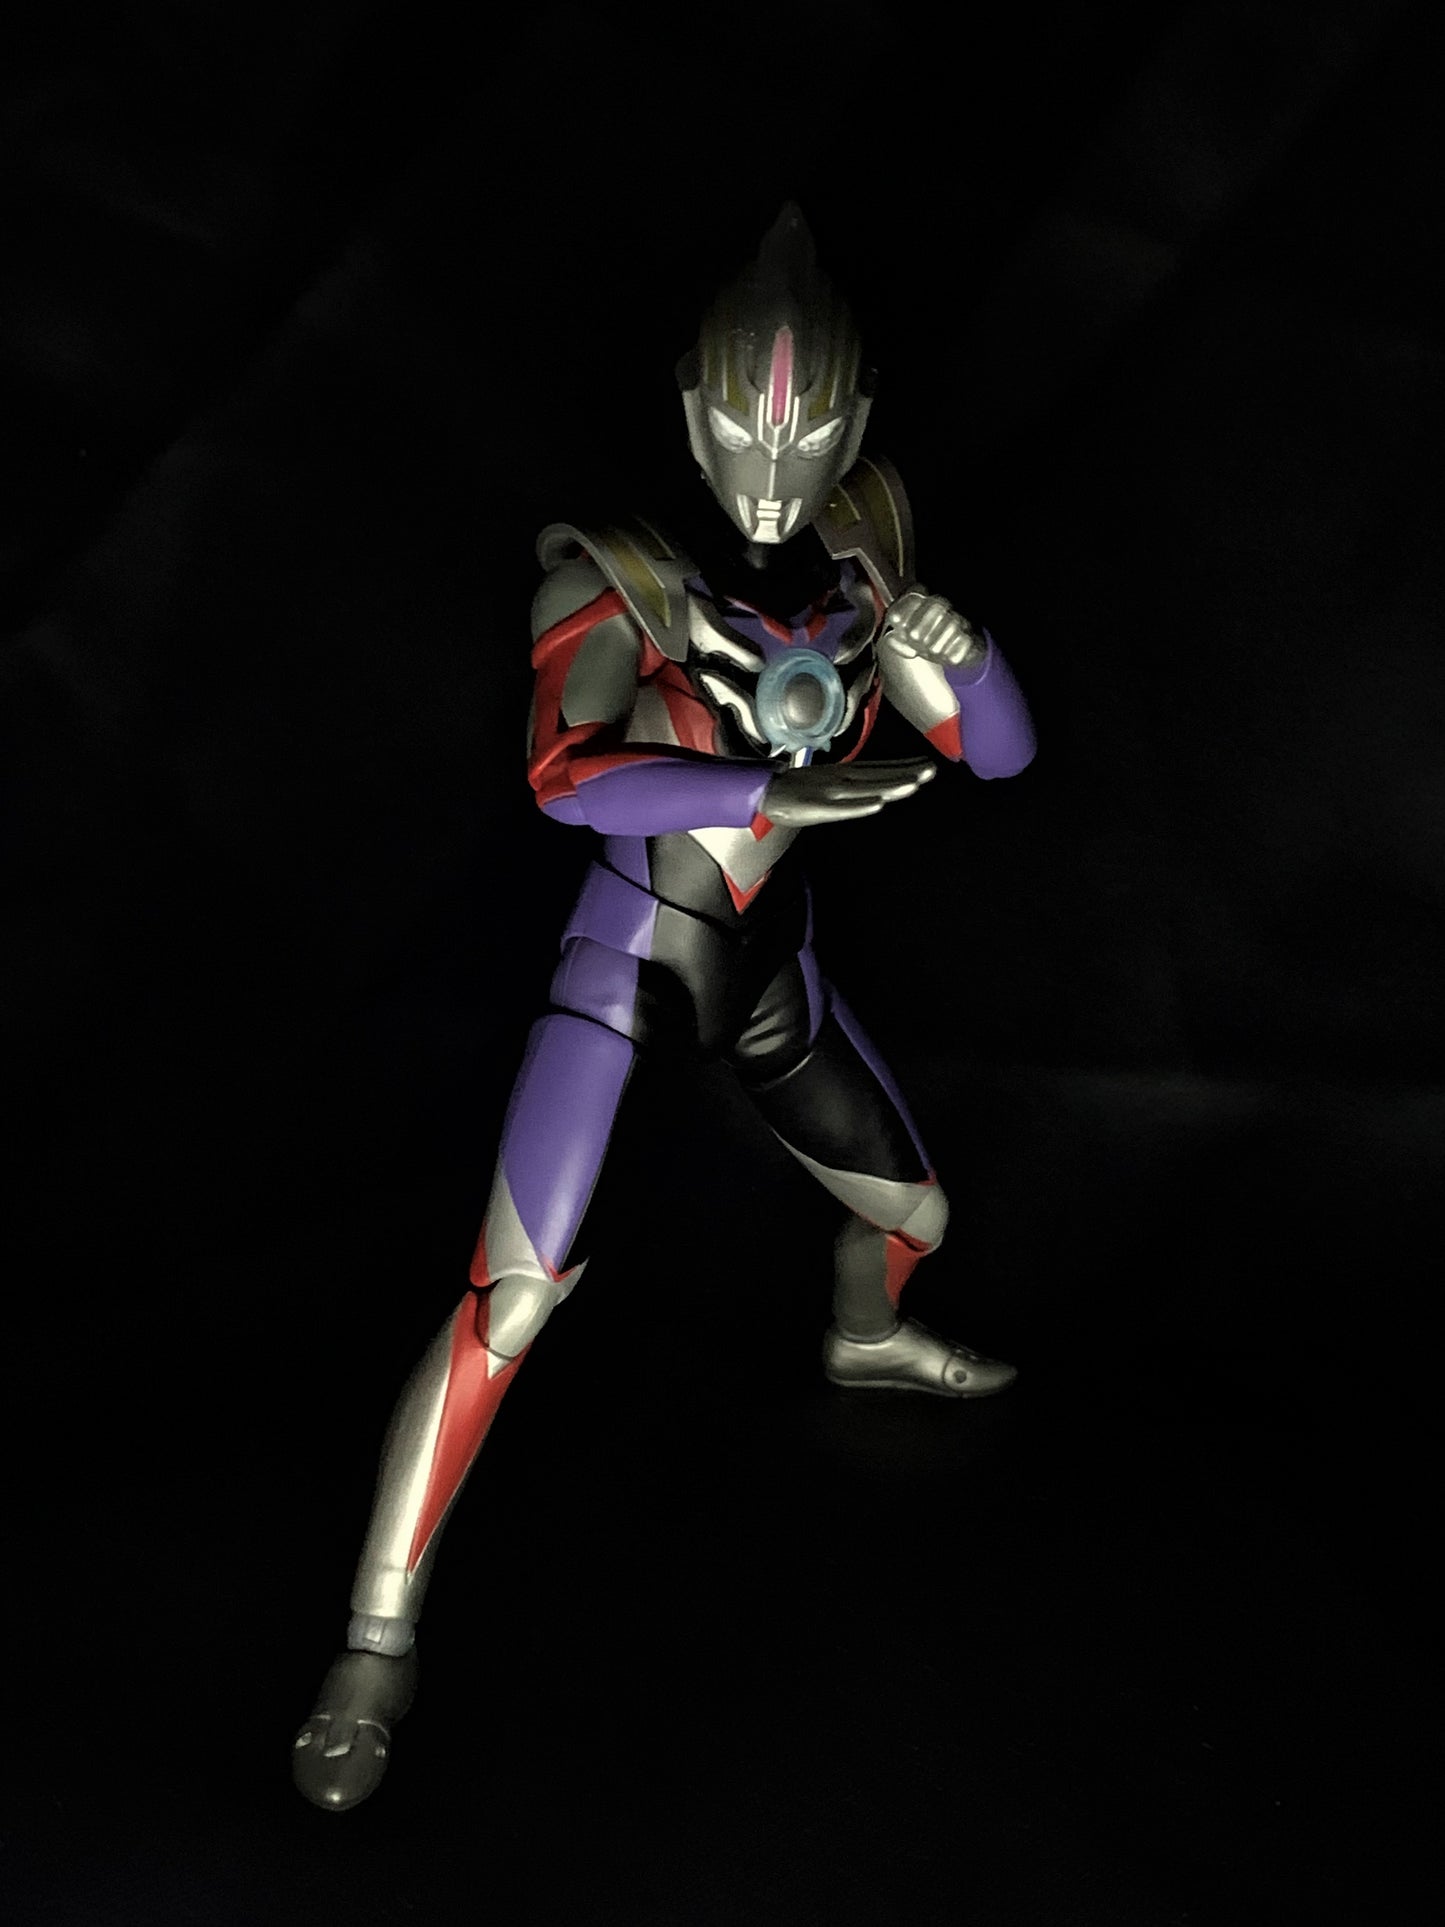 SHFiguarts Ultraman Orb Spacium Zeperion